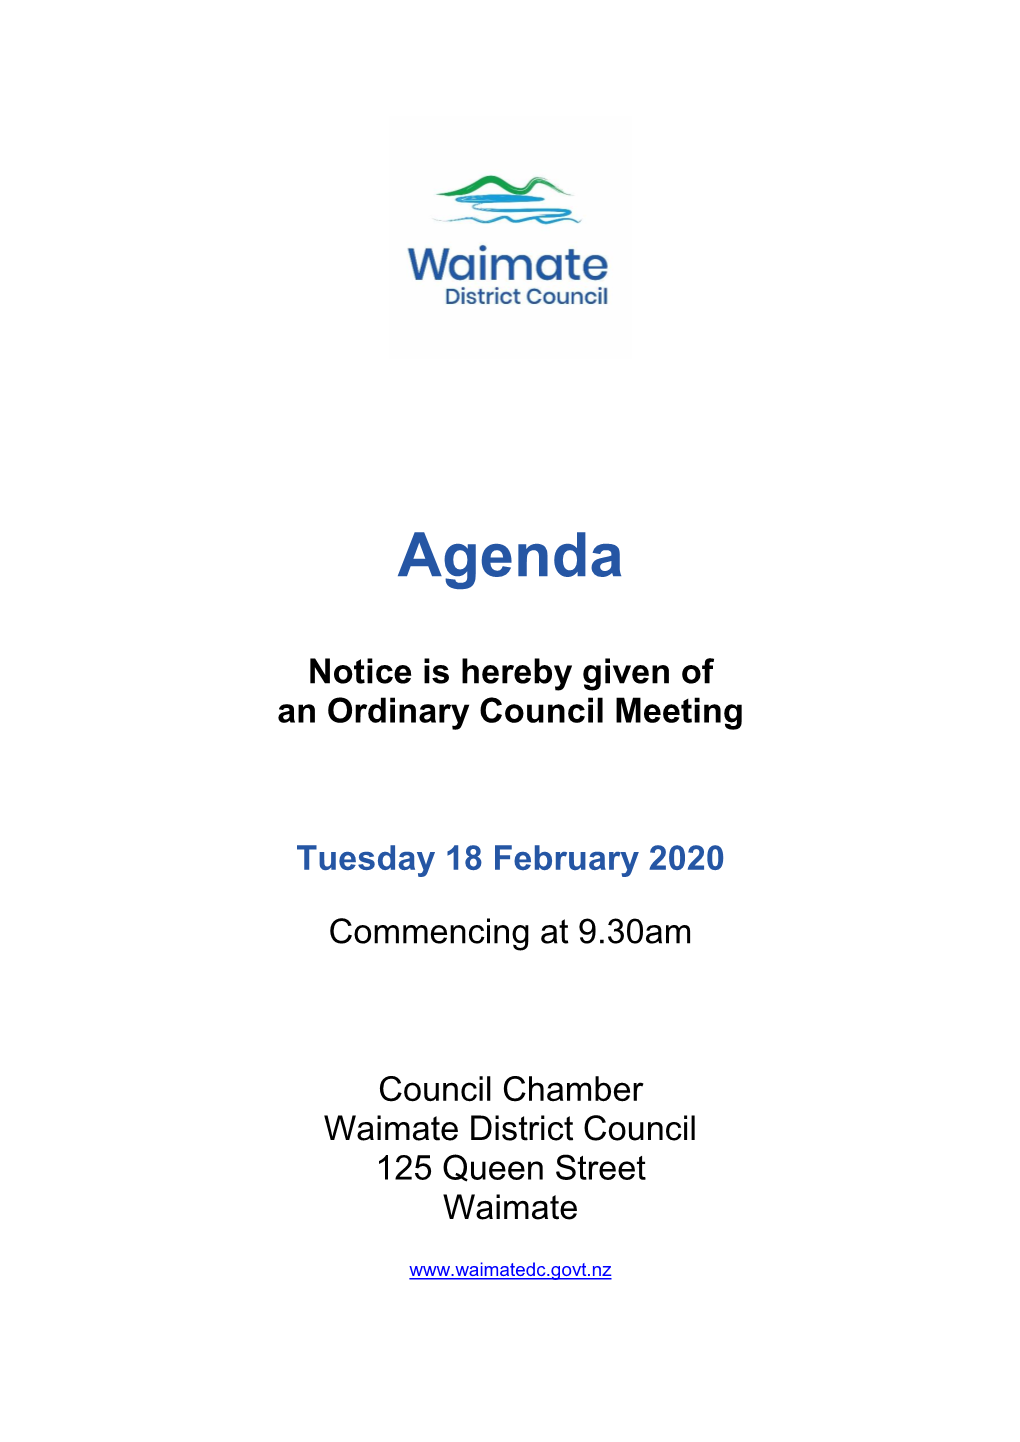 Agenda of Ordinary Council Meeting